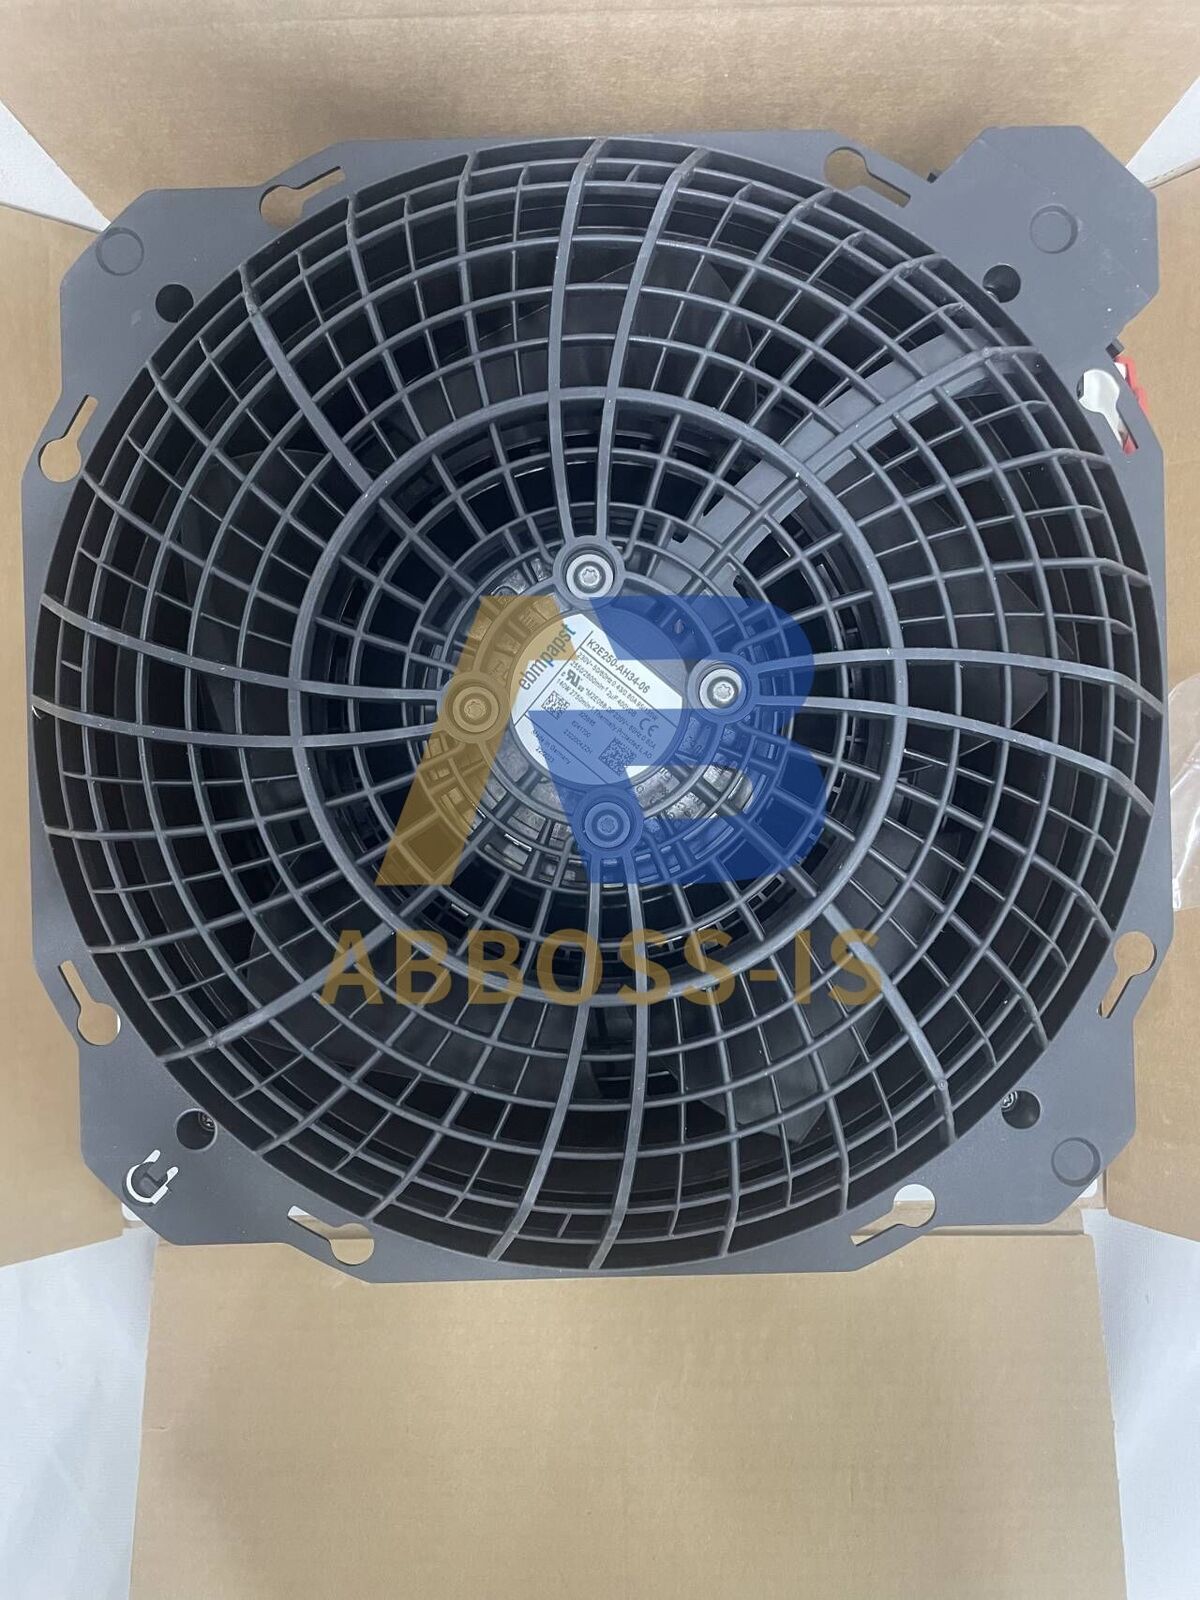 New Ebmpapst K2E250-AH34-06 Cooling Fan AC230V 95/135W Via FedEX or DHL